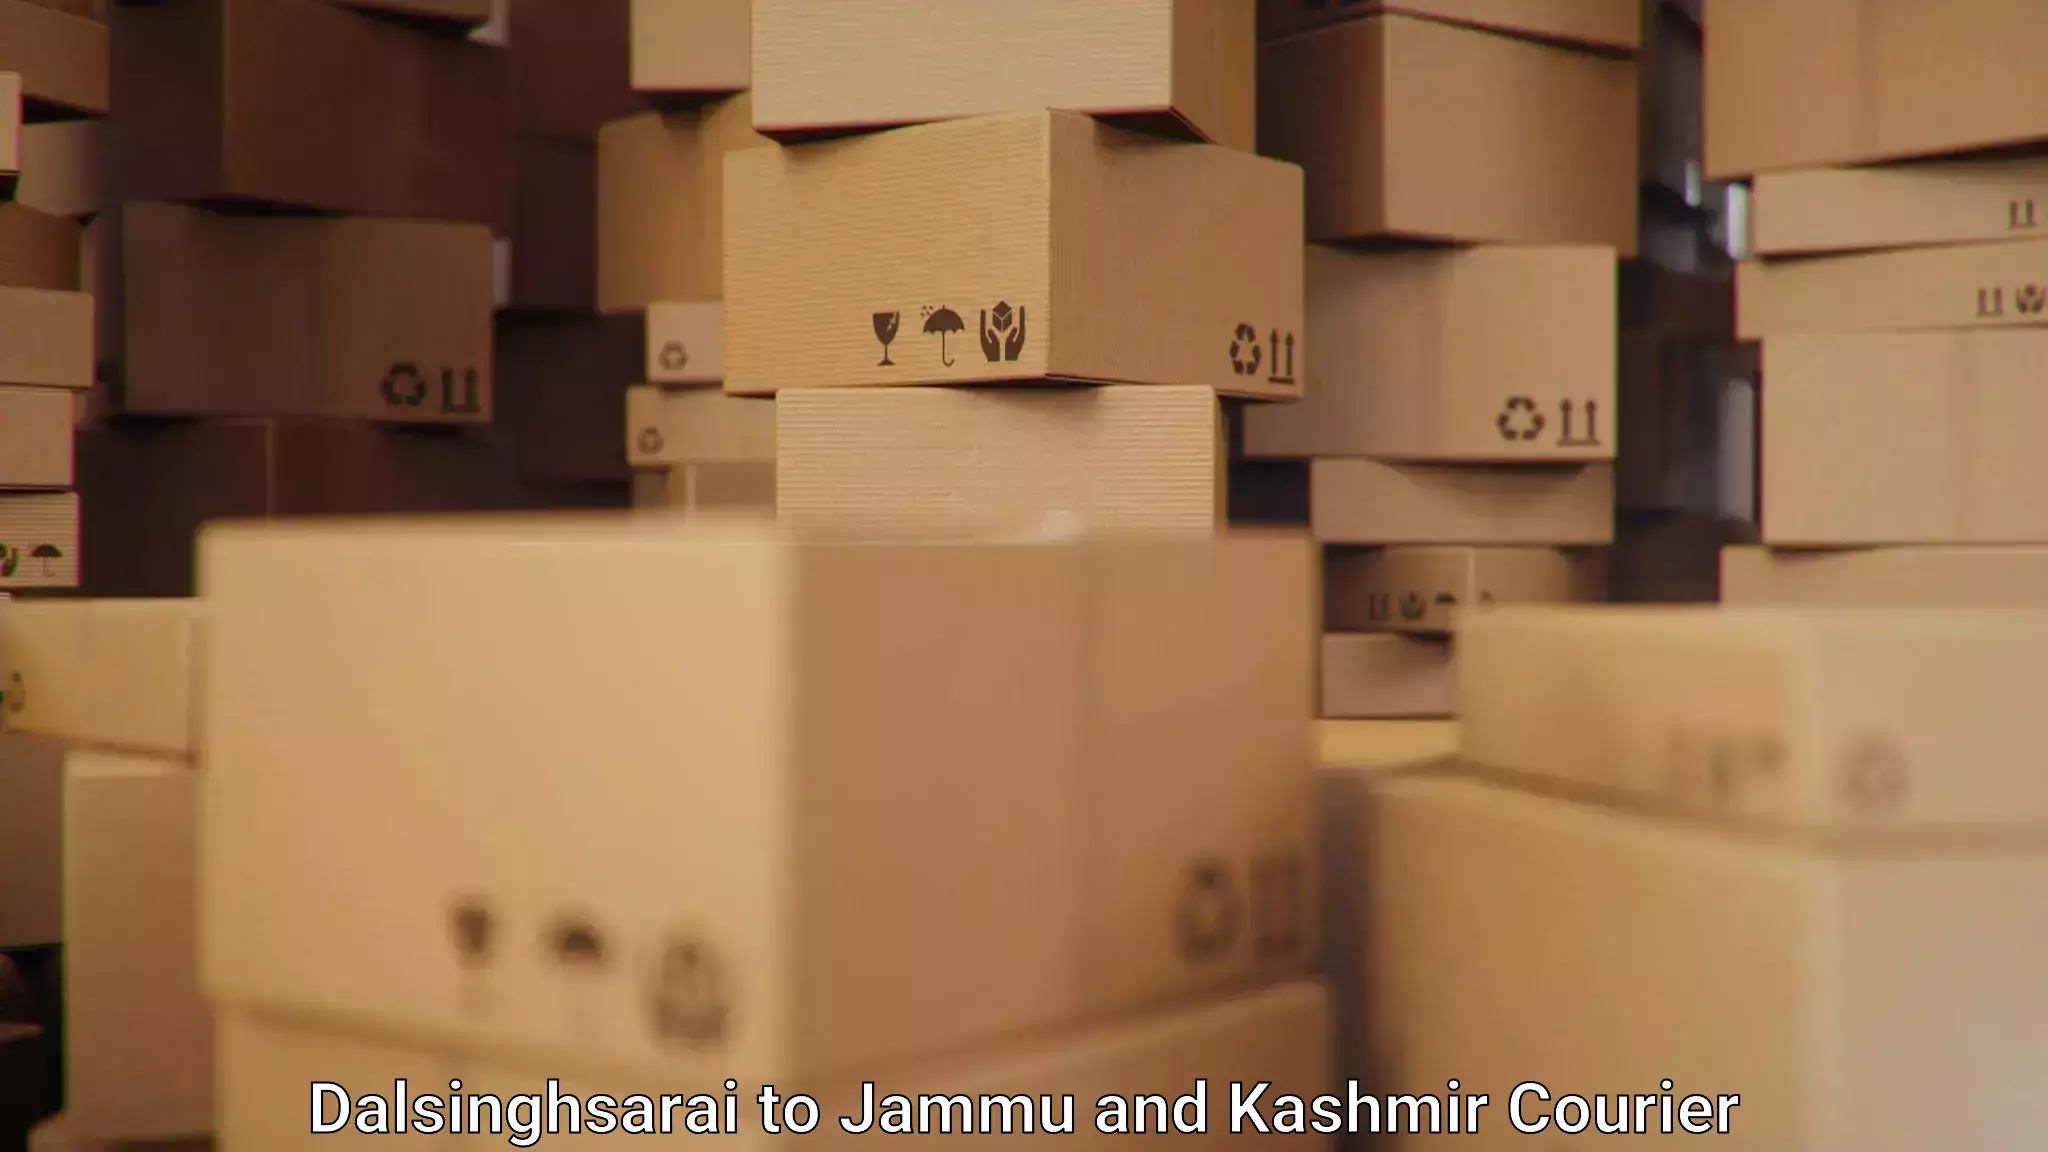 Courier service partnerships Dalsinghsarai to Jammu and Kashmir